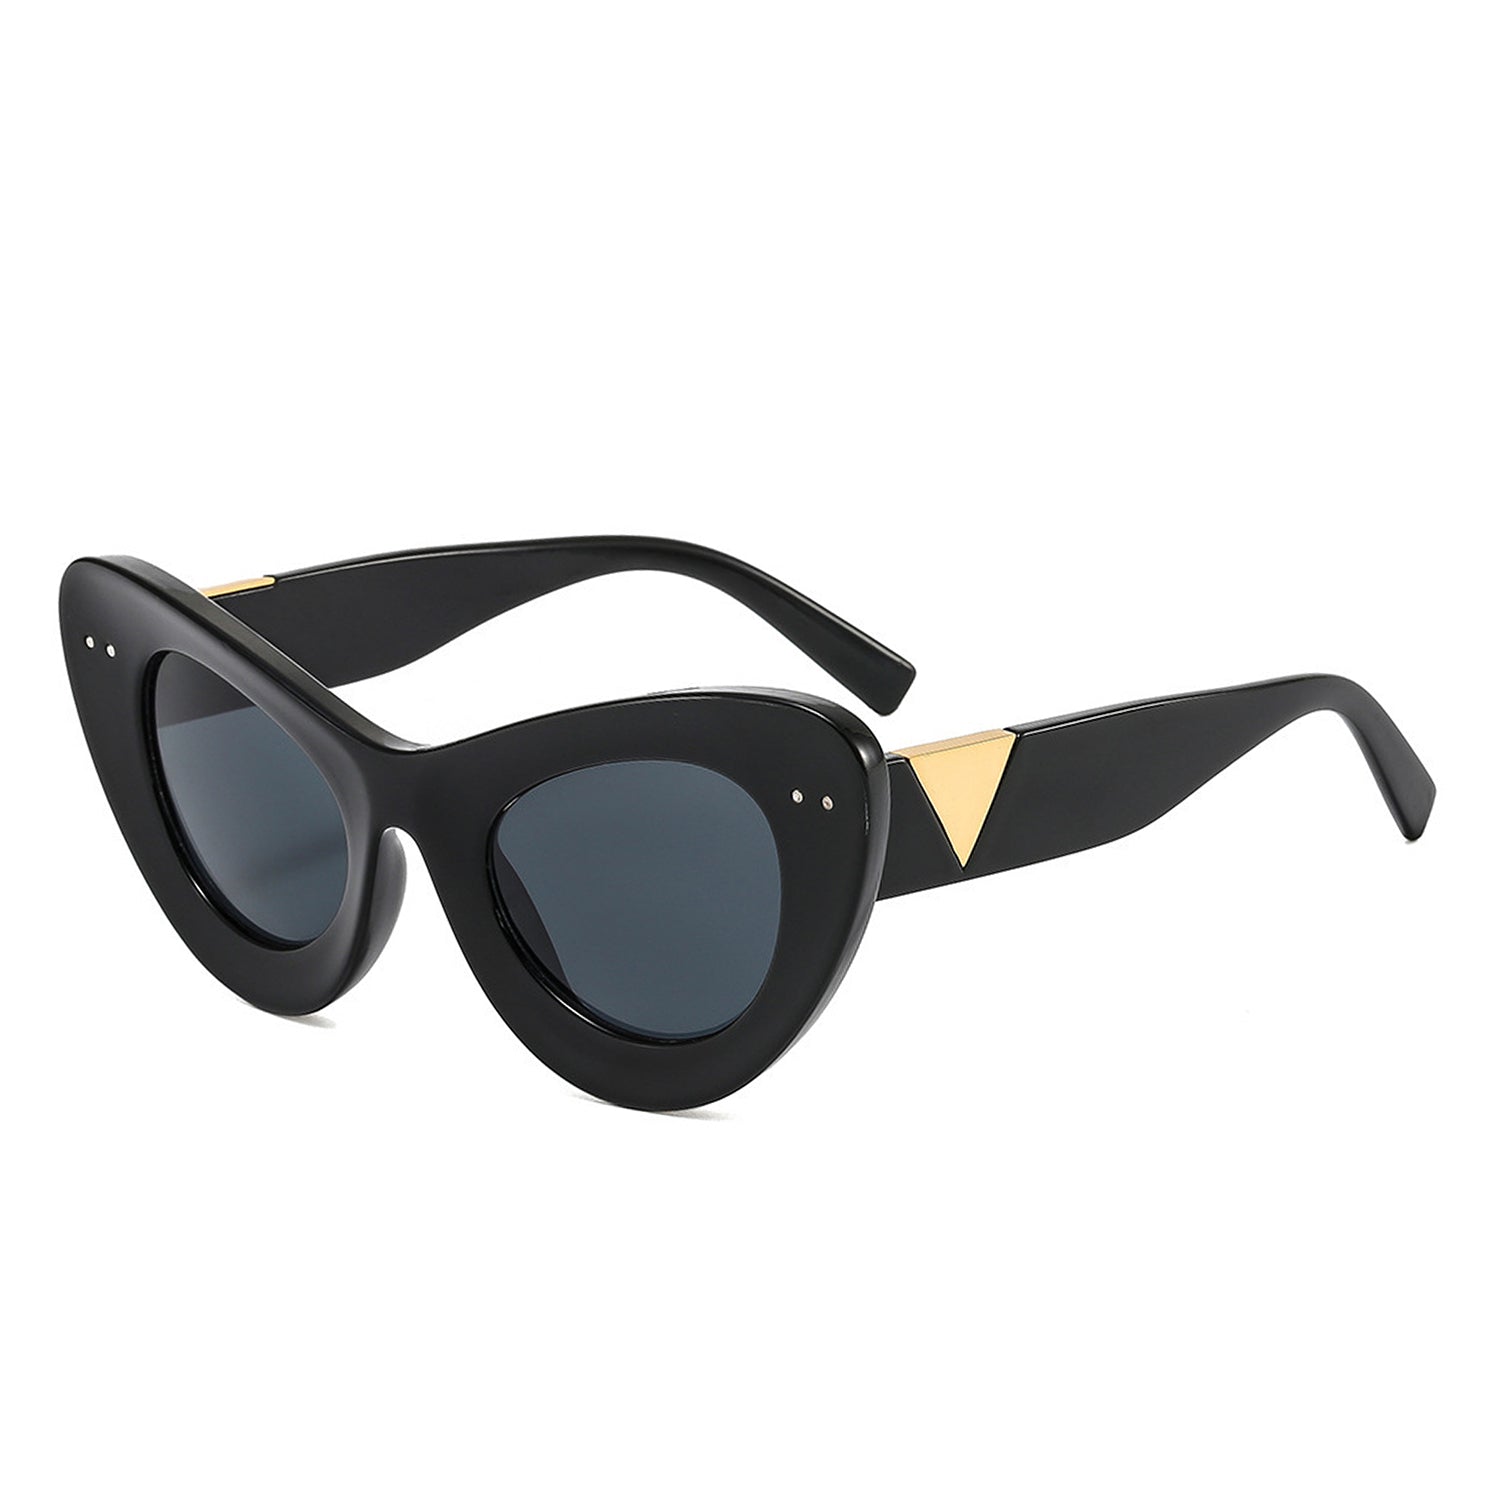 sunglasses louis vuitton price